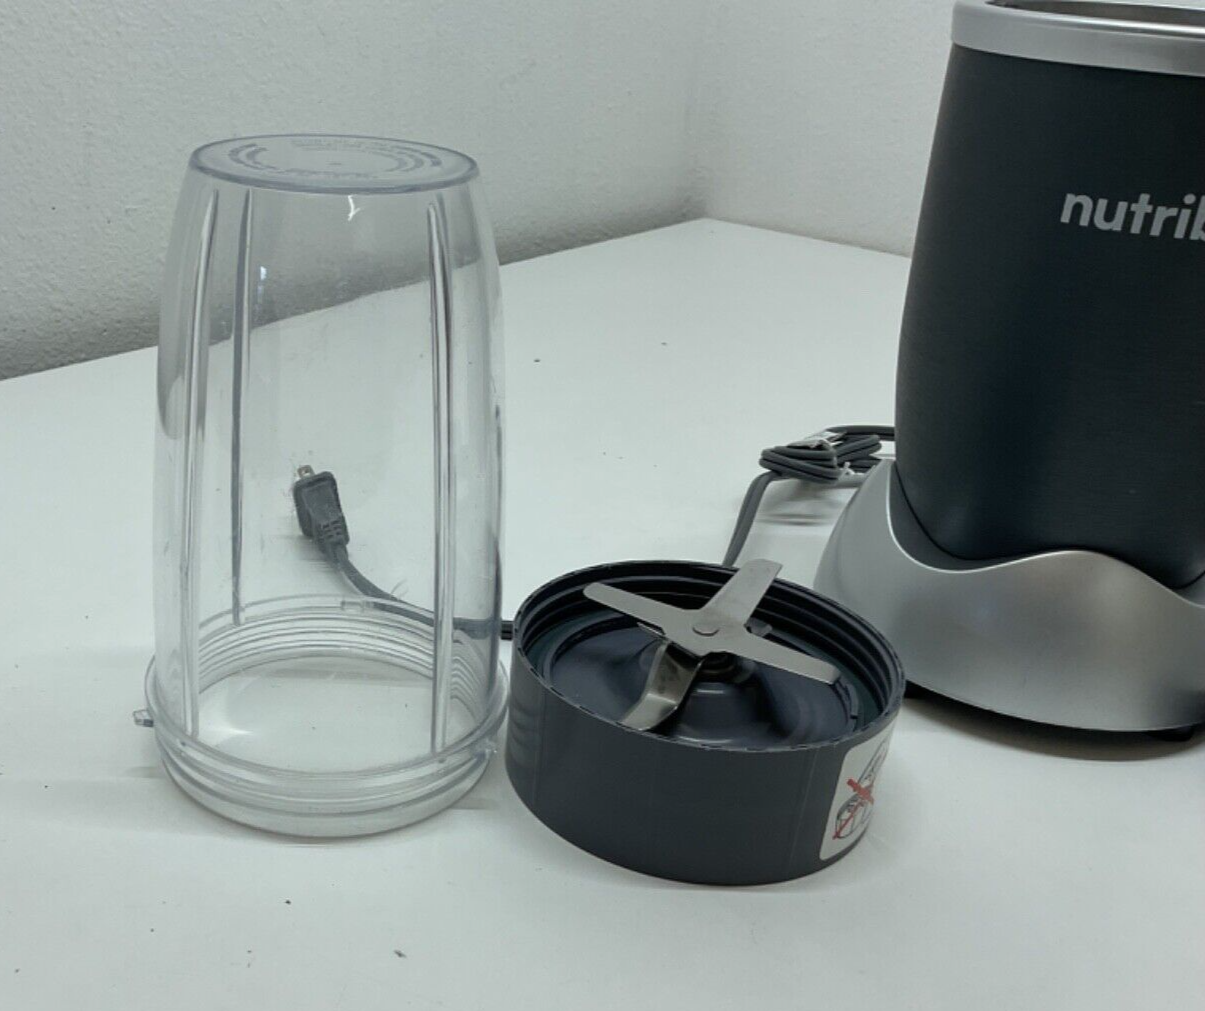 NutriBullet NBR-1201 12-Piece High-Speed Blender/Mixer System, Gray/silver (600 Watts)